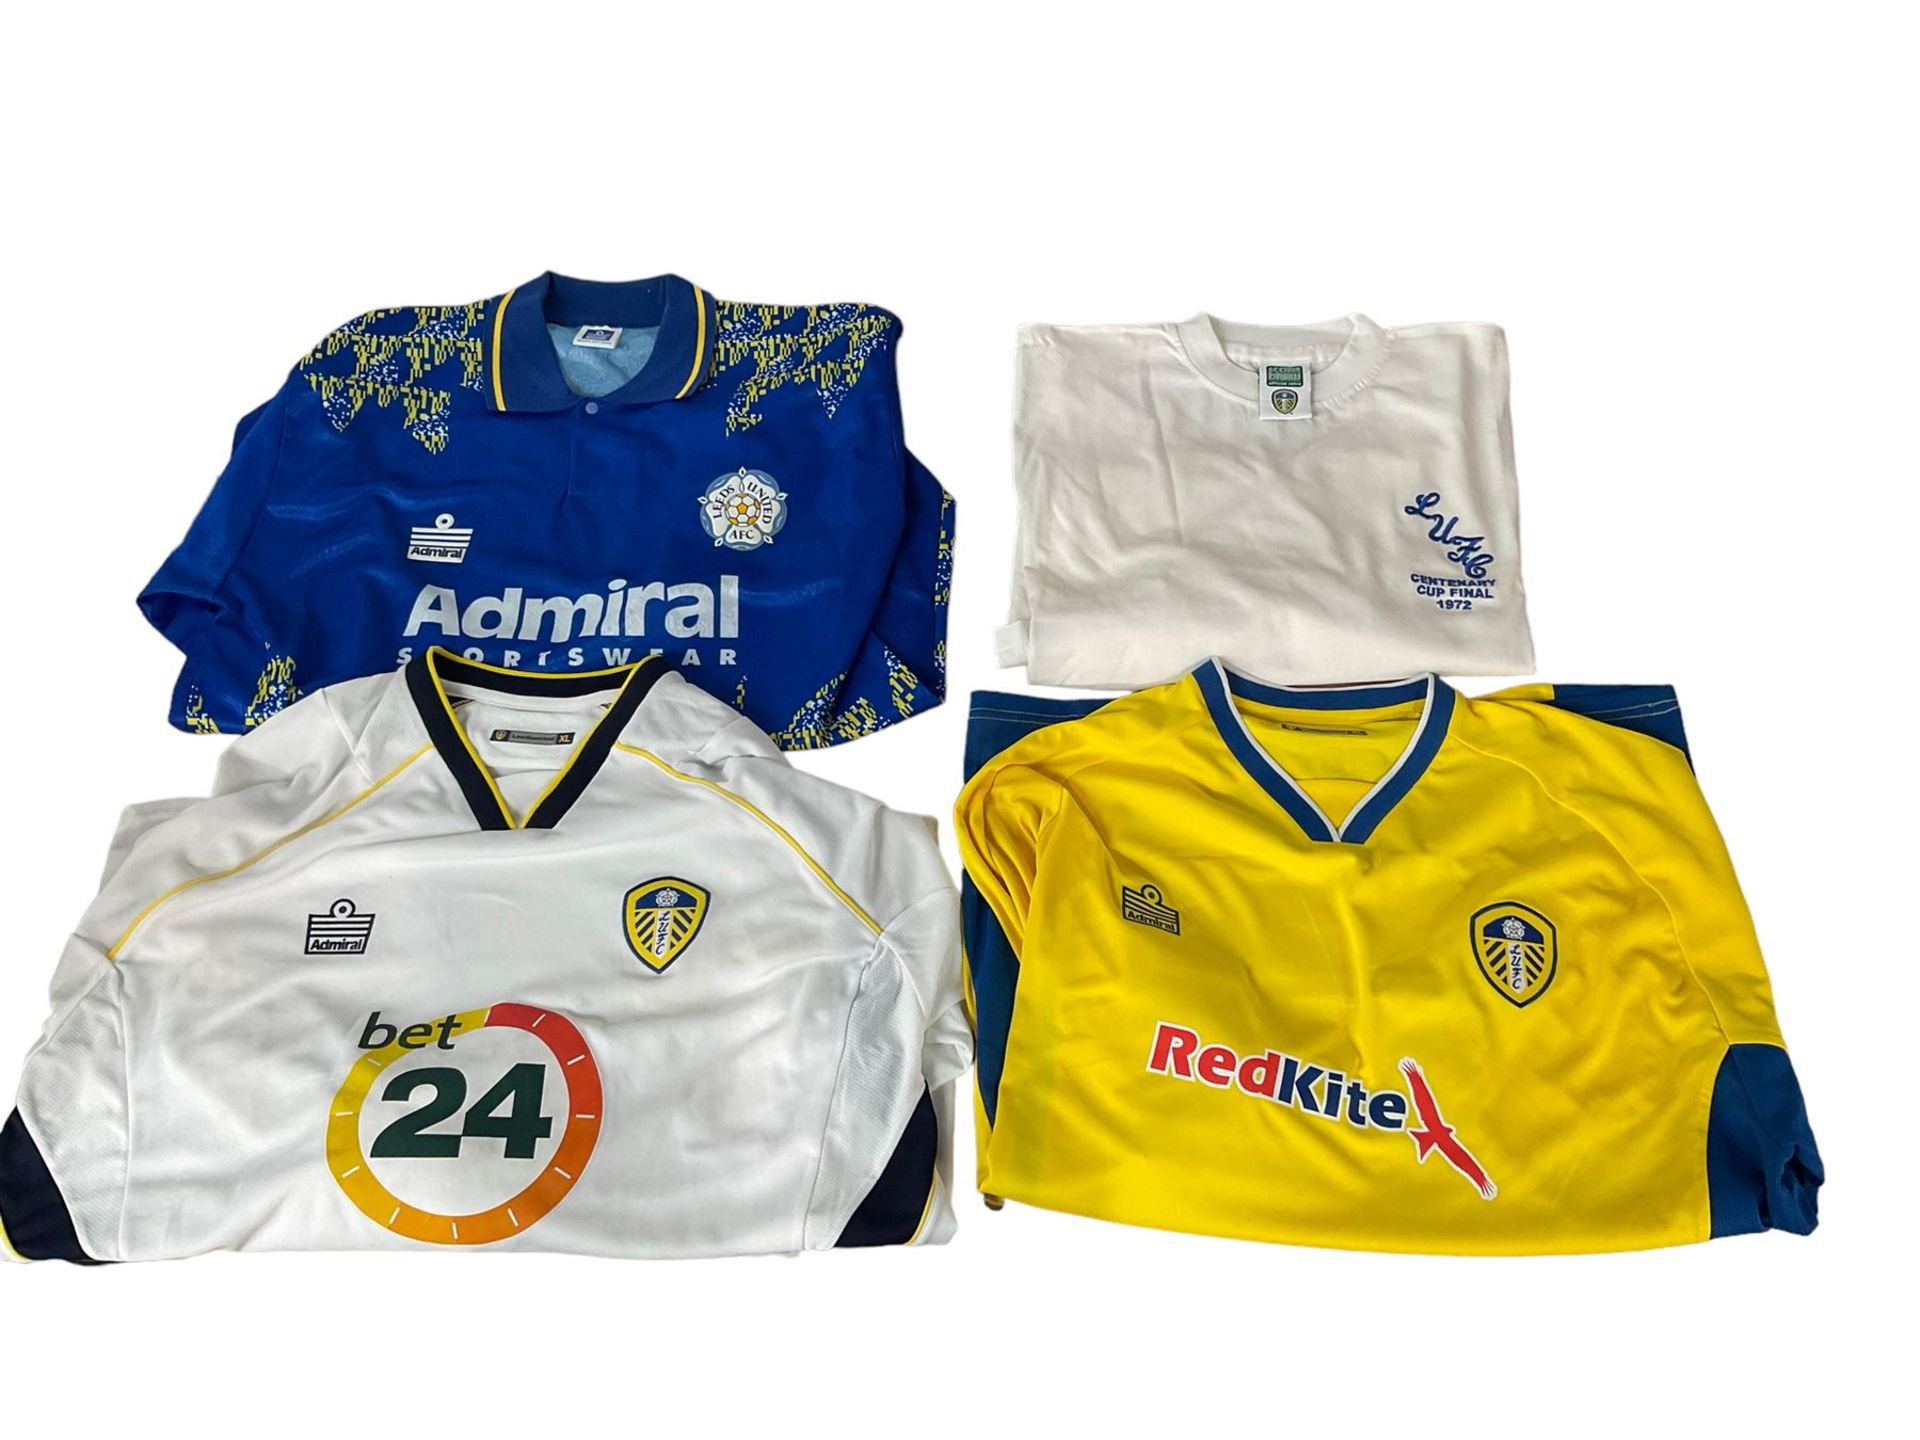 Leeds United football club - twenty-three replica shirts including 1970s 'Arkwright' - Image 5 of 7